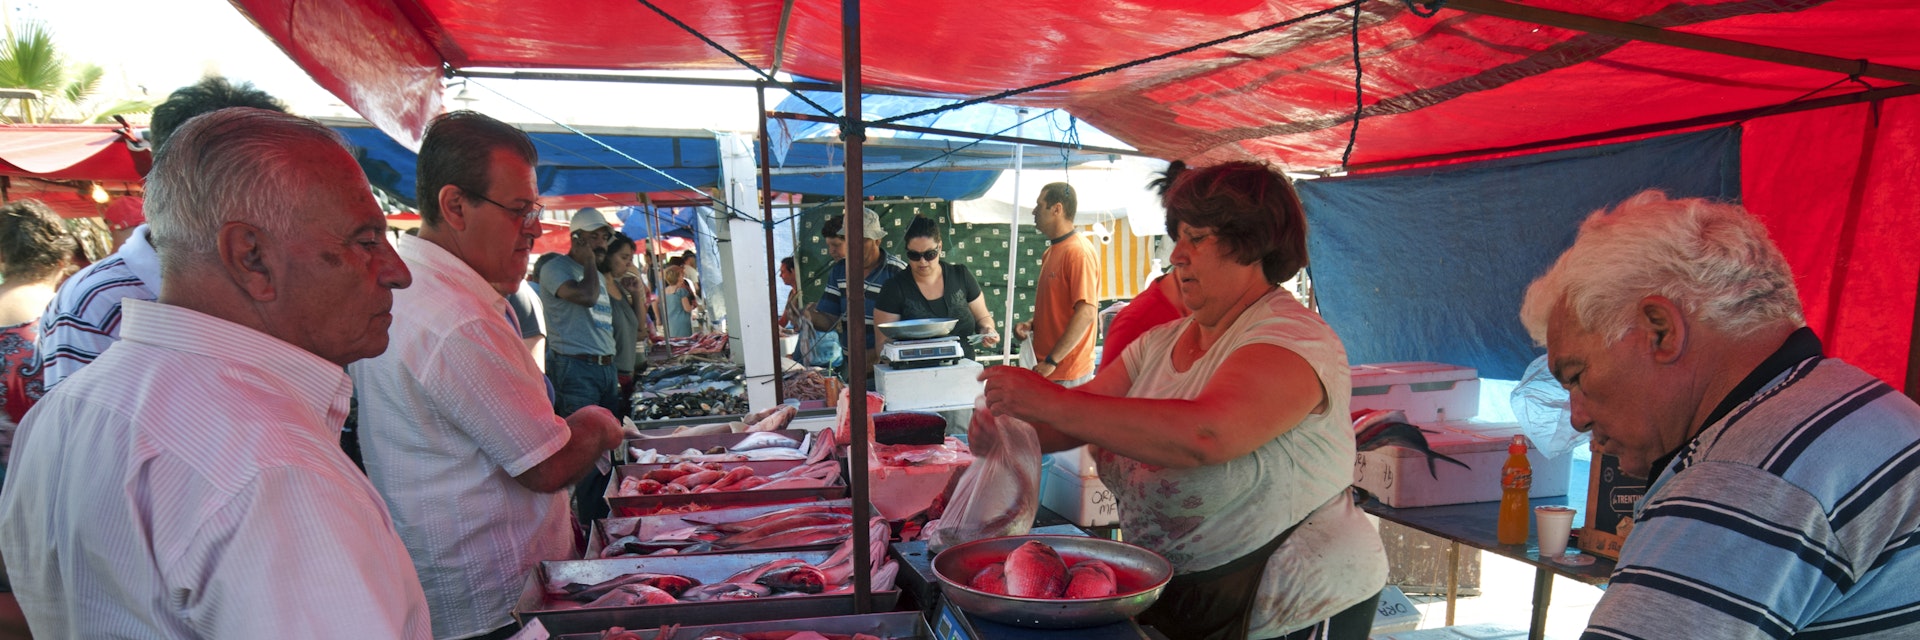 Stall at Sunday Fish Market, Marsaxlokk